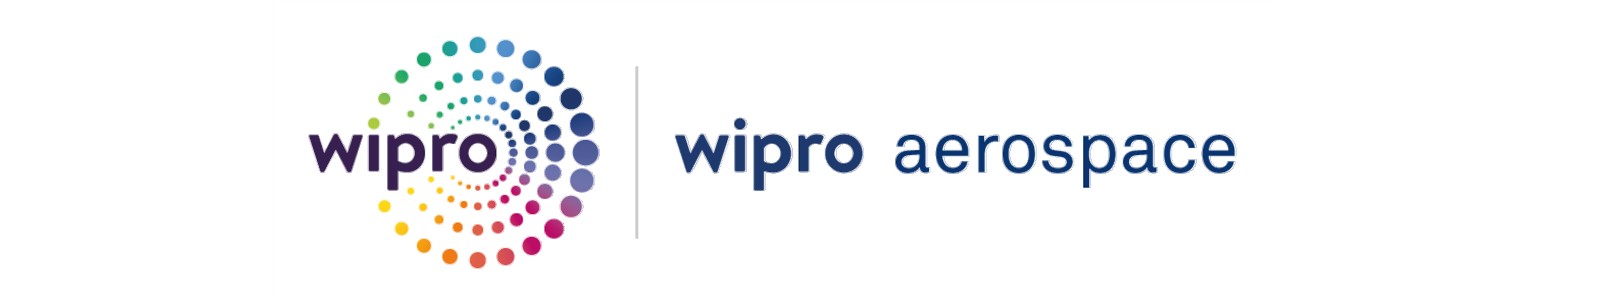 Wipro Aerospace-300a